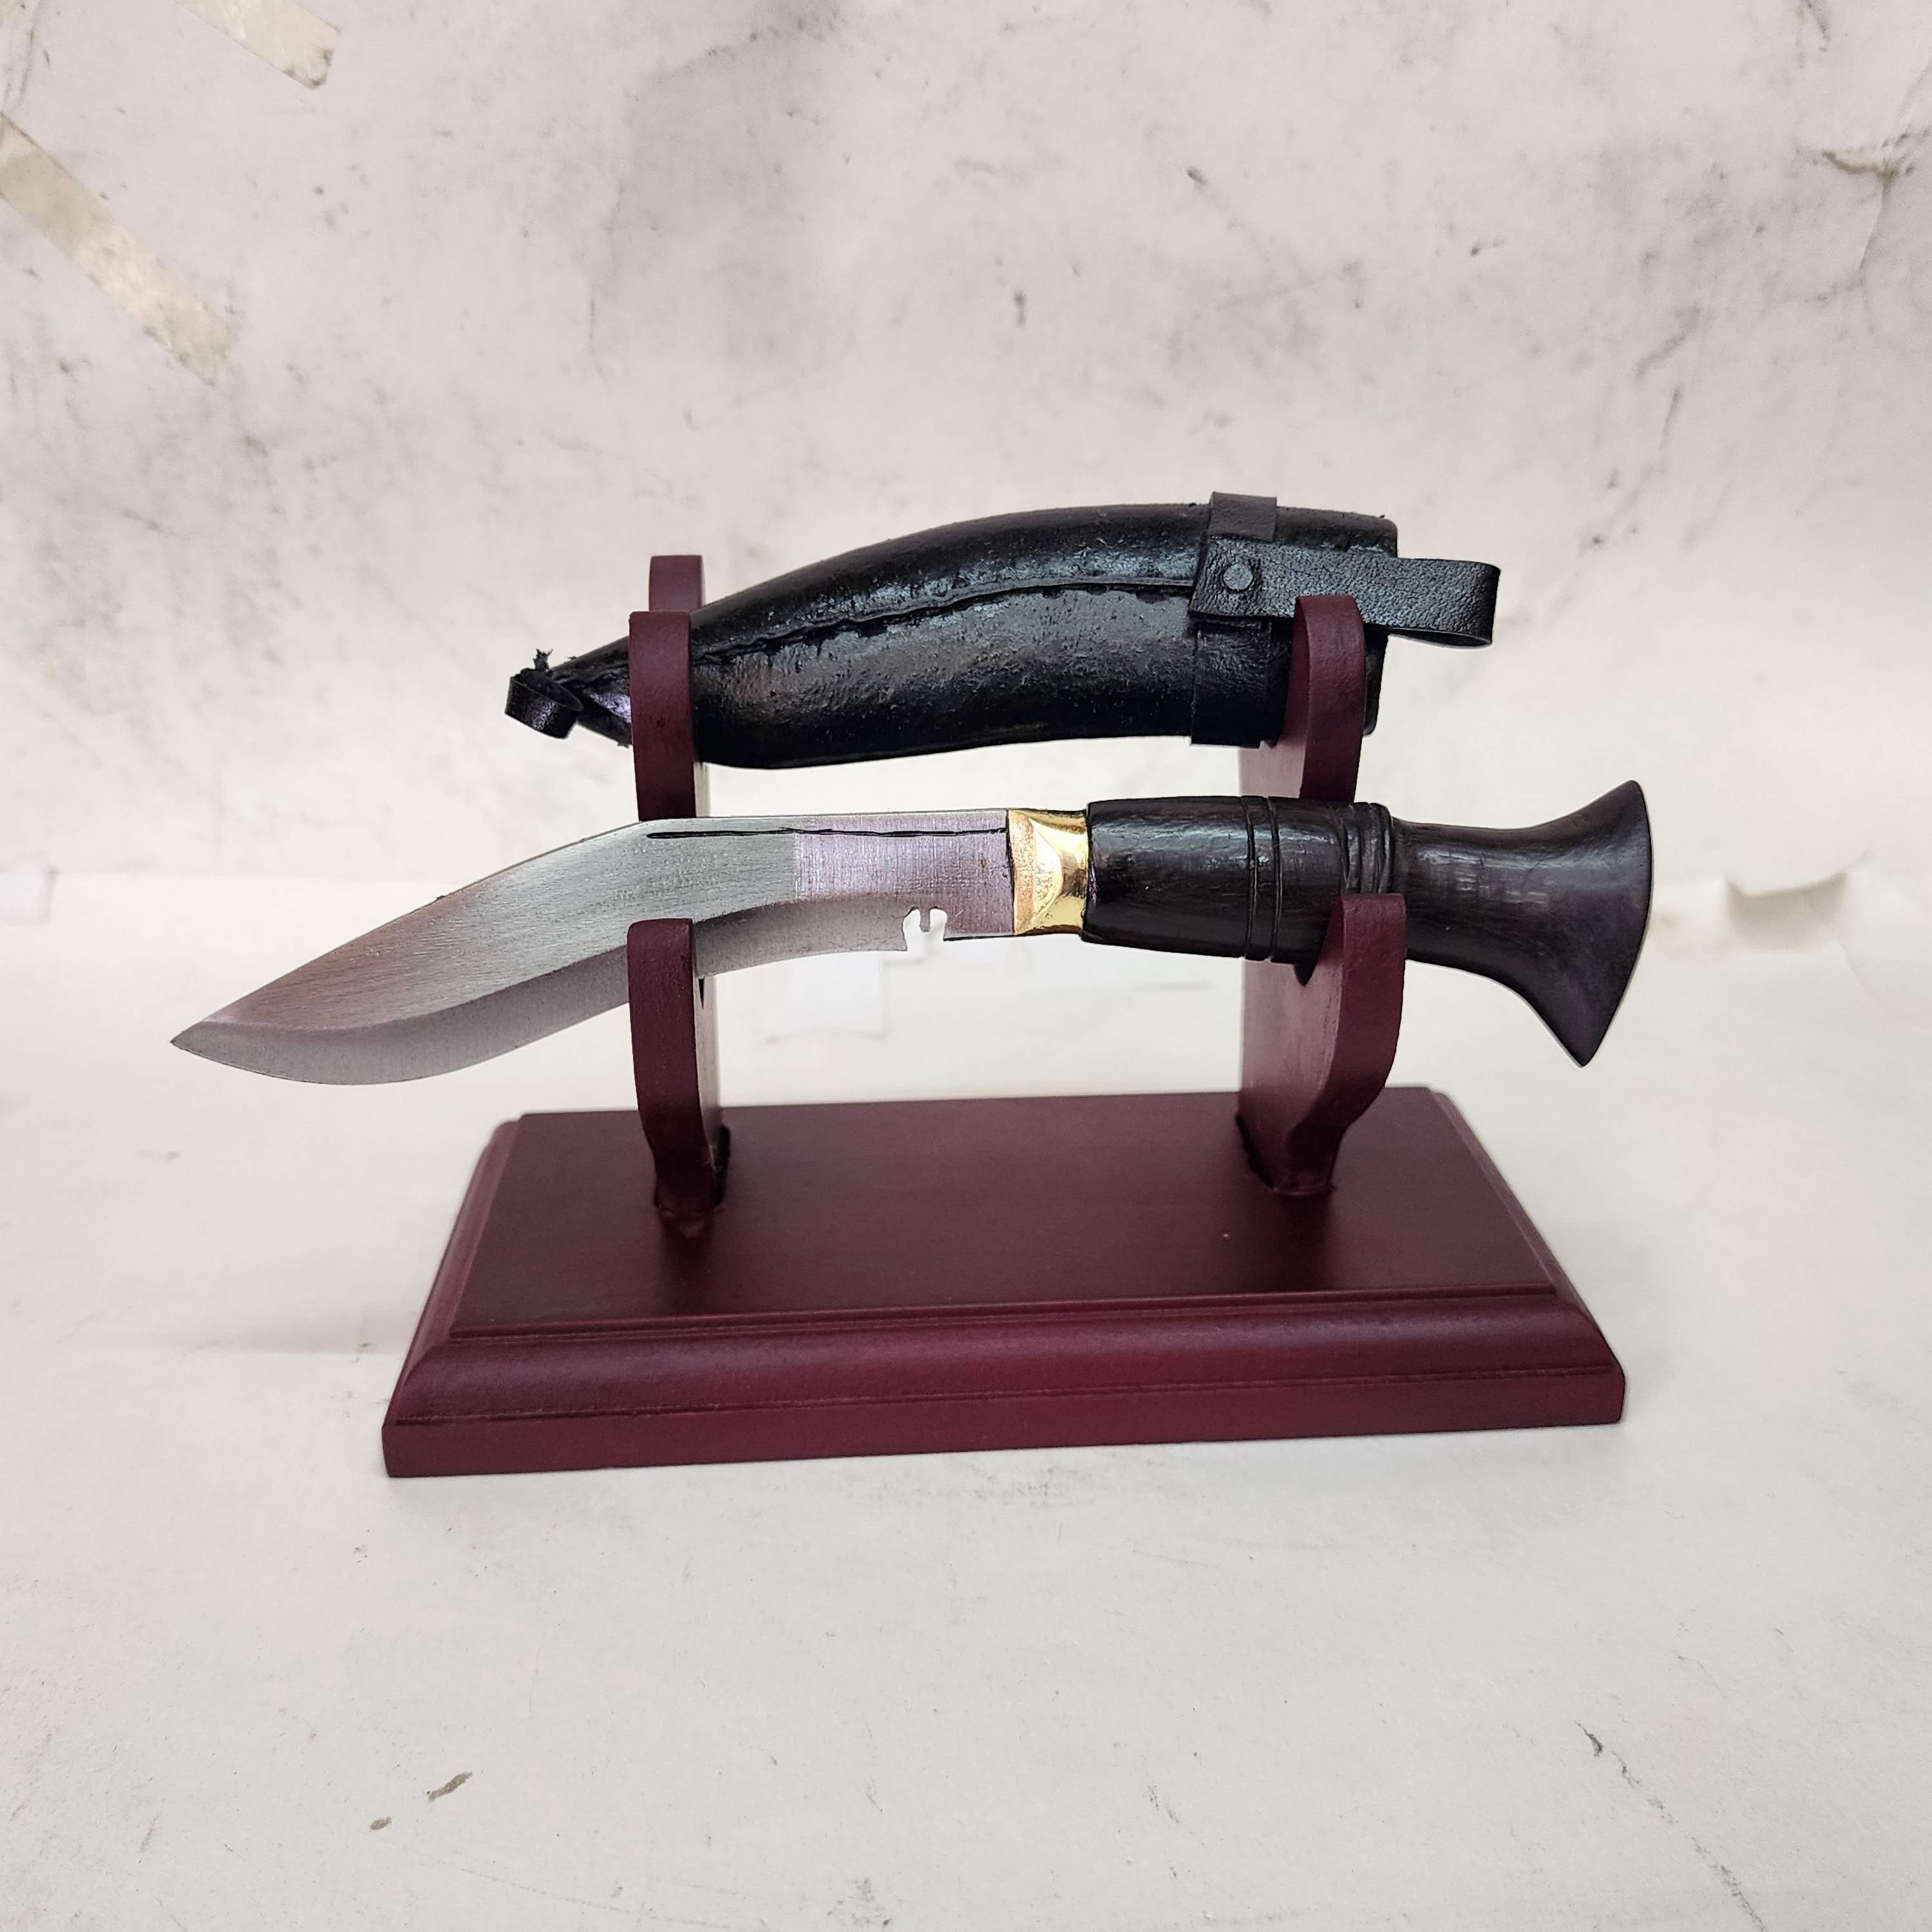 4 Inch, khukuri, Gurkha Knife - sirupate With Leather Cover And Stand, Nepali Machete